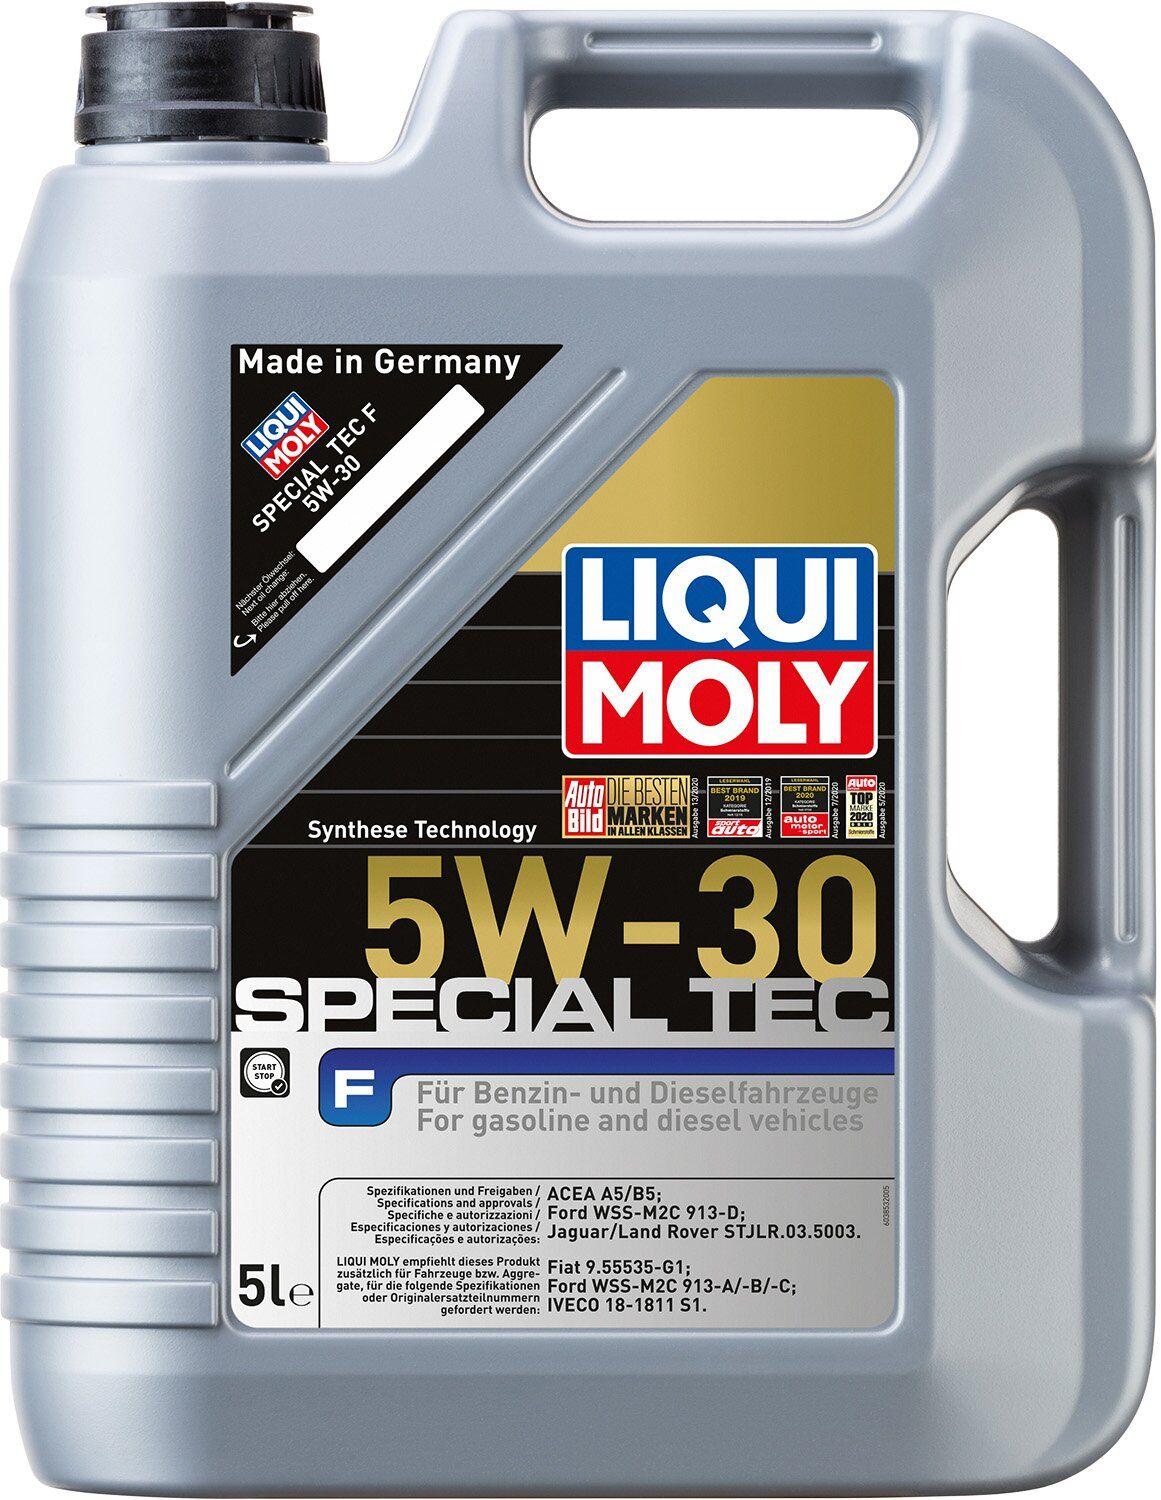 Моторное масло Liqui Moly Special Tec F 5W-30, 5 литров (FORD) (2326)